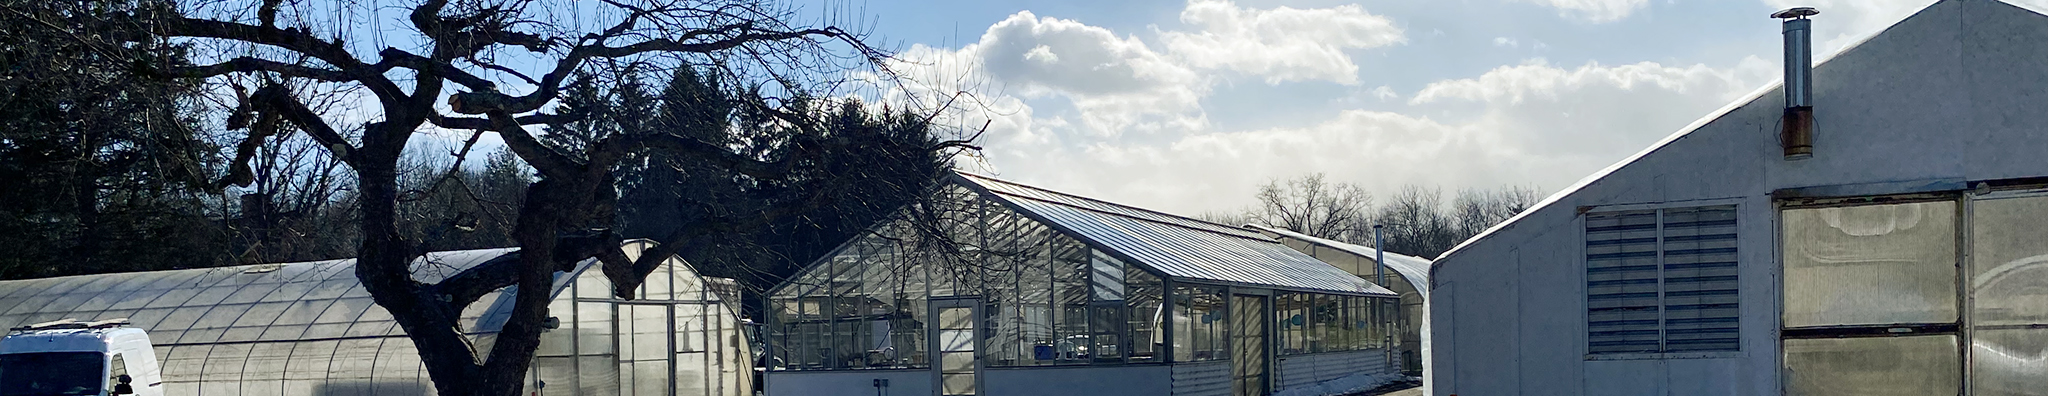 Greenhouses at BAG headquarters